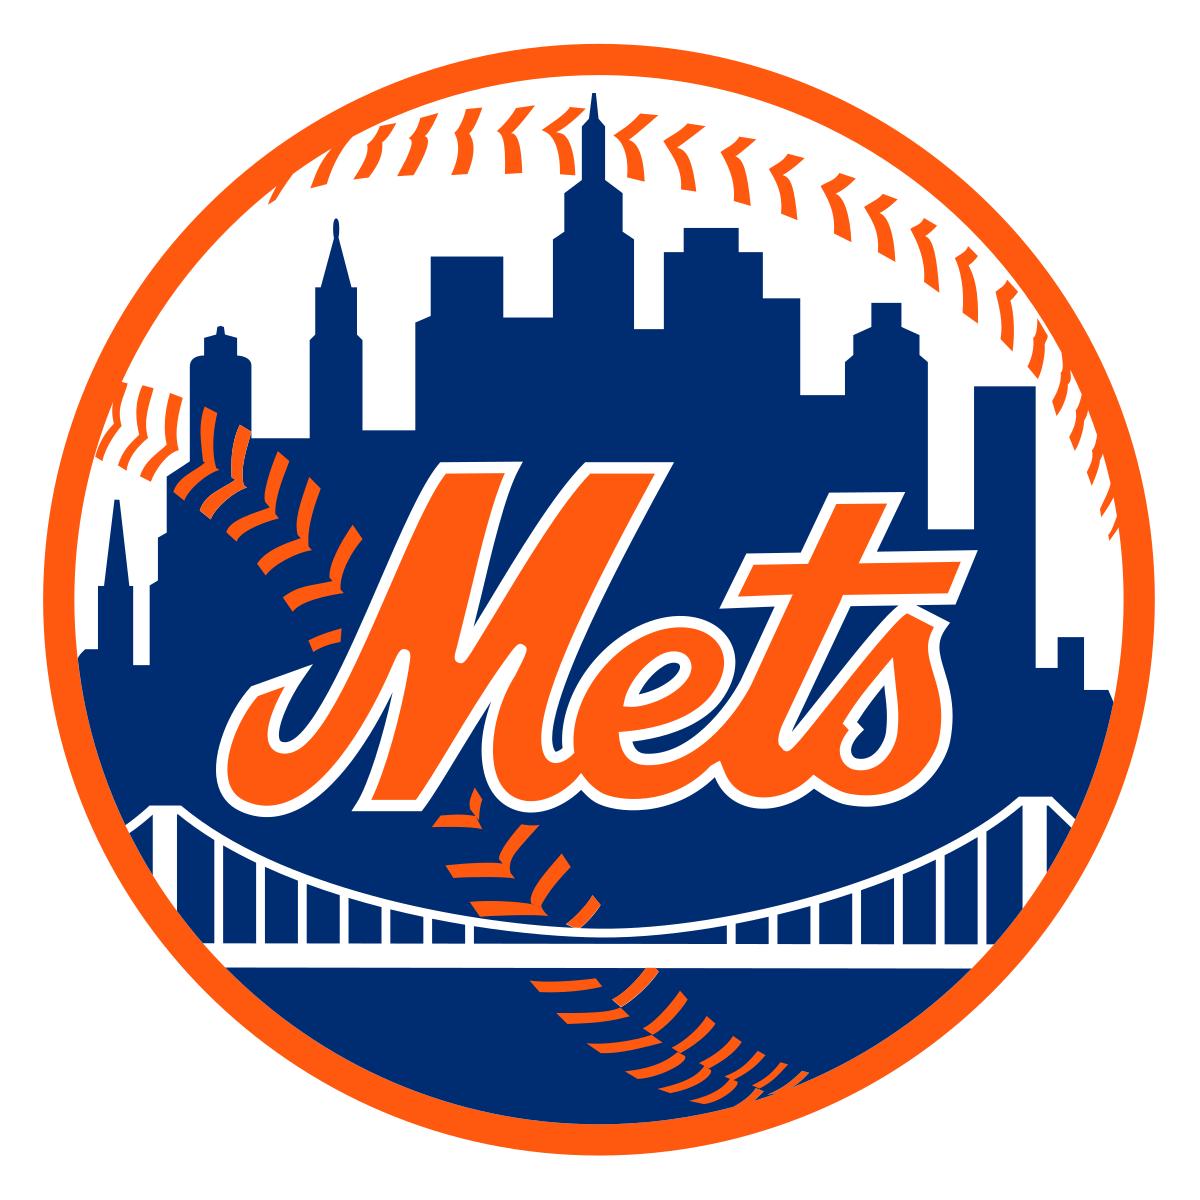 New York Mets Citi Field